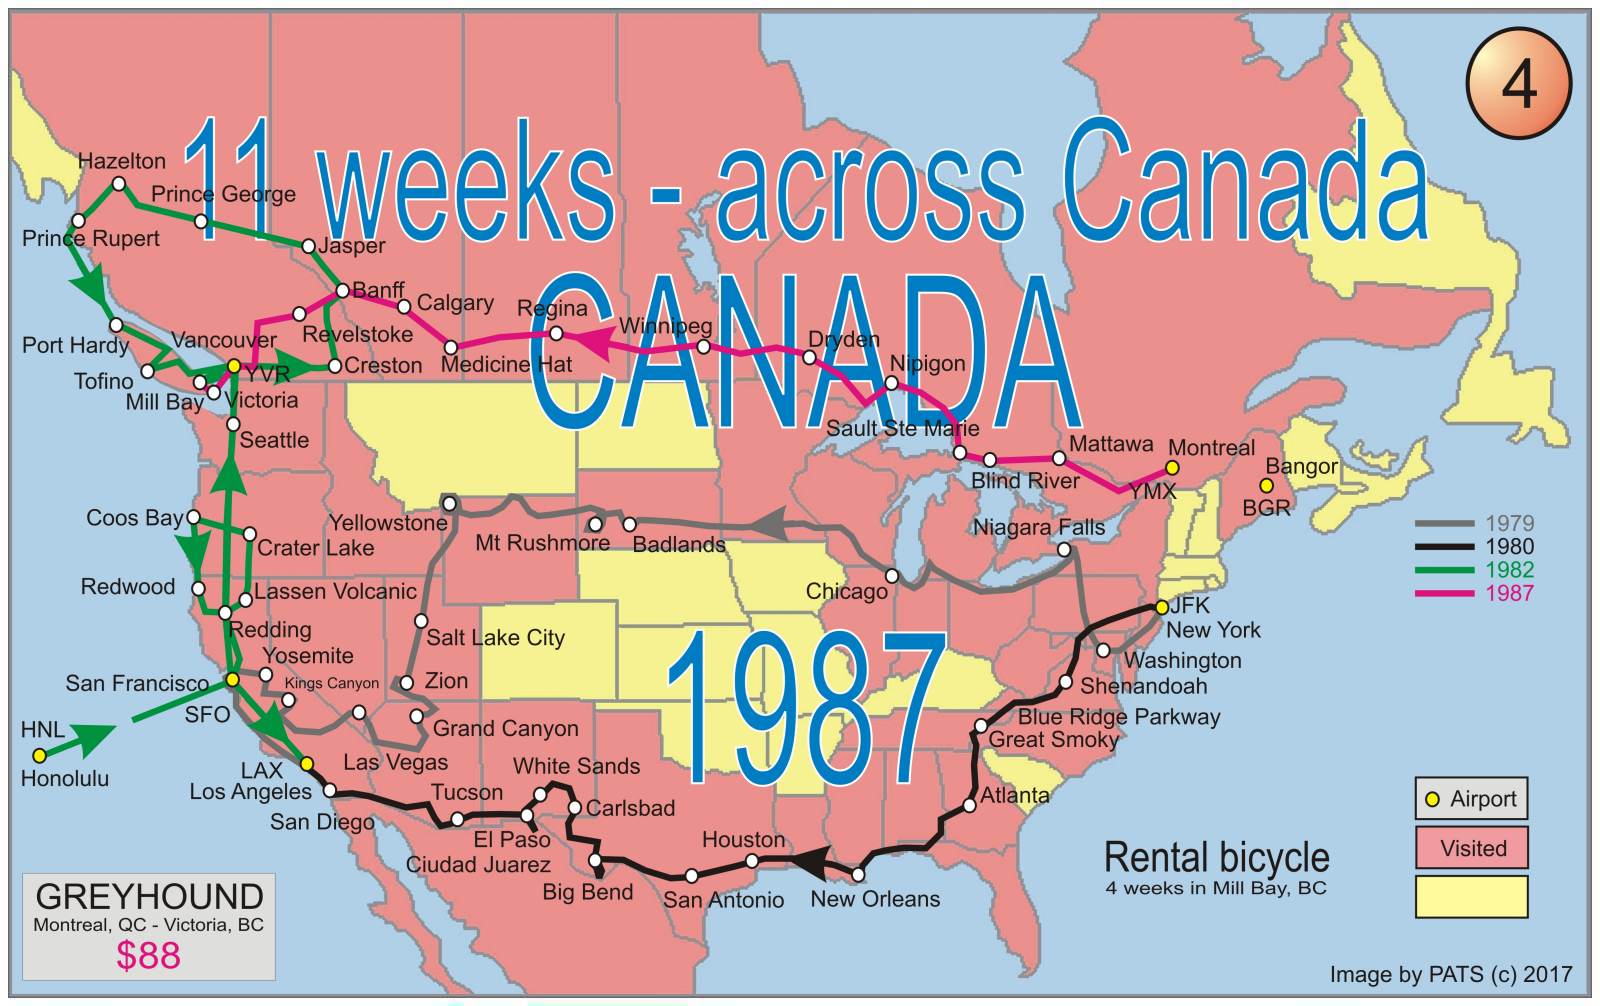 1987 - 11 weeks - across Canada to Vancouver Island